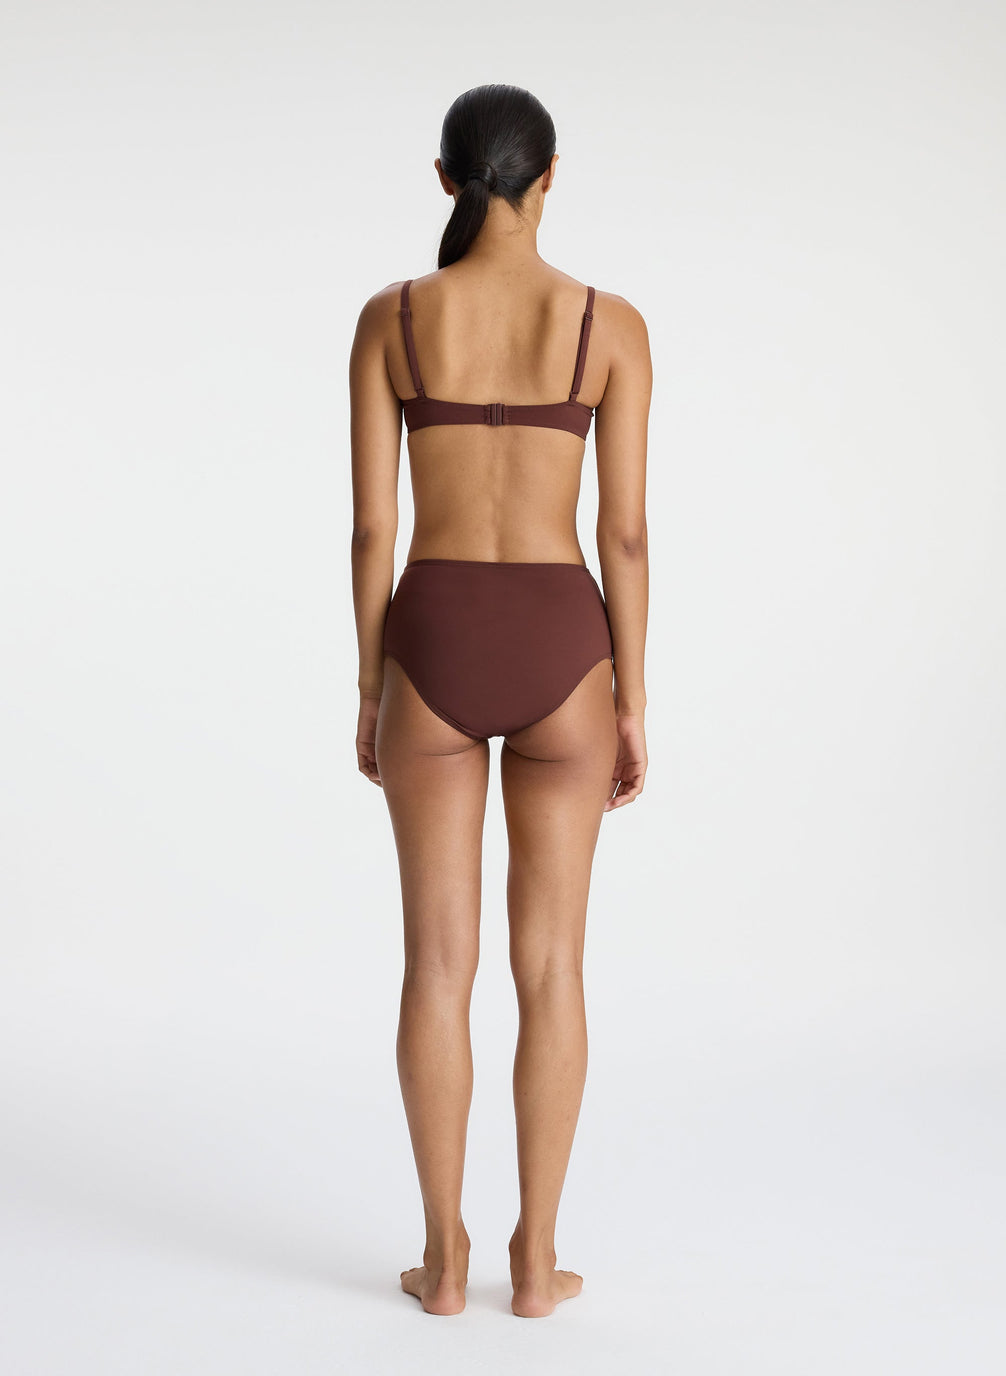 back view of woman wearing brown bikini set